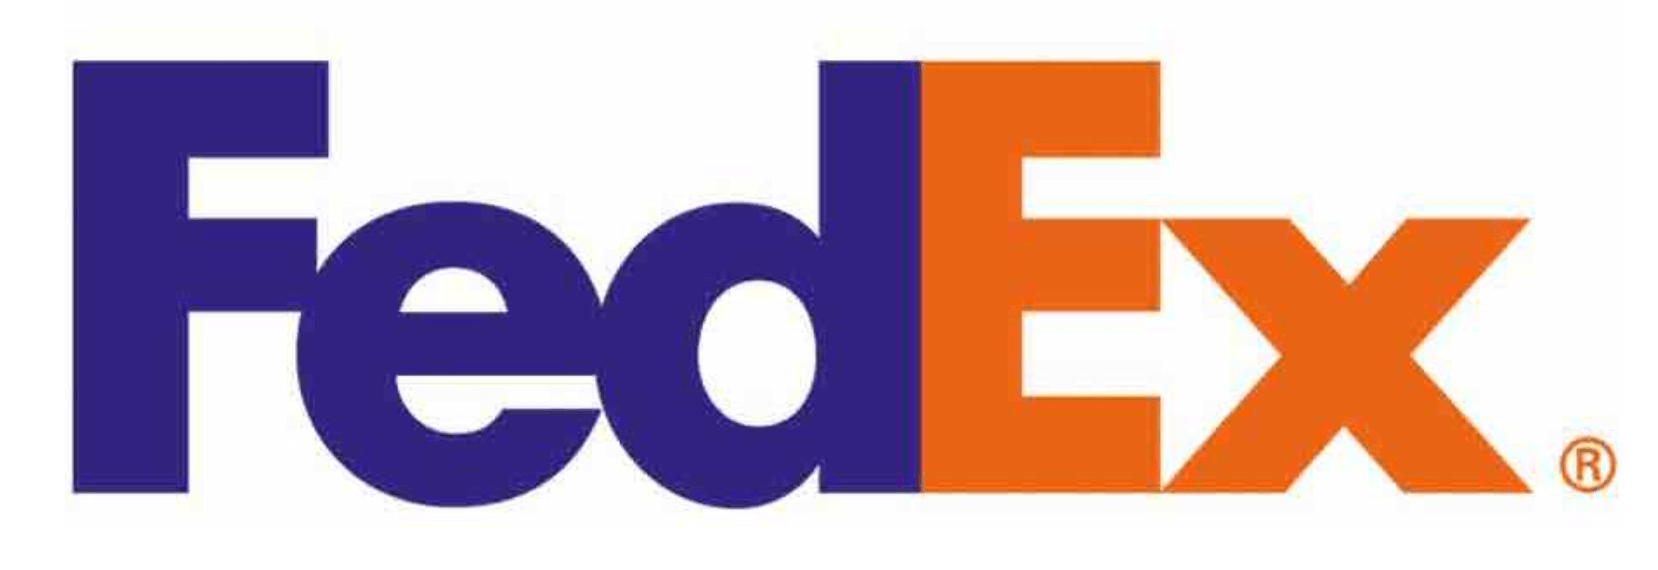 The FedEx logo in purple and orange